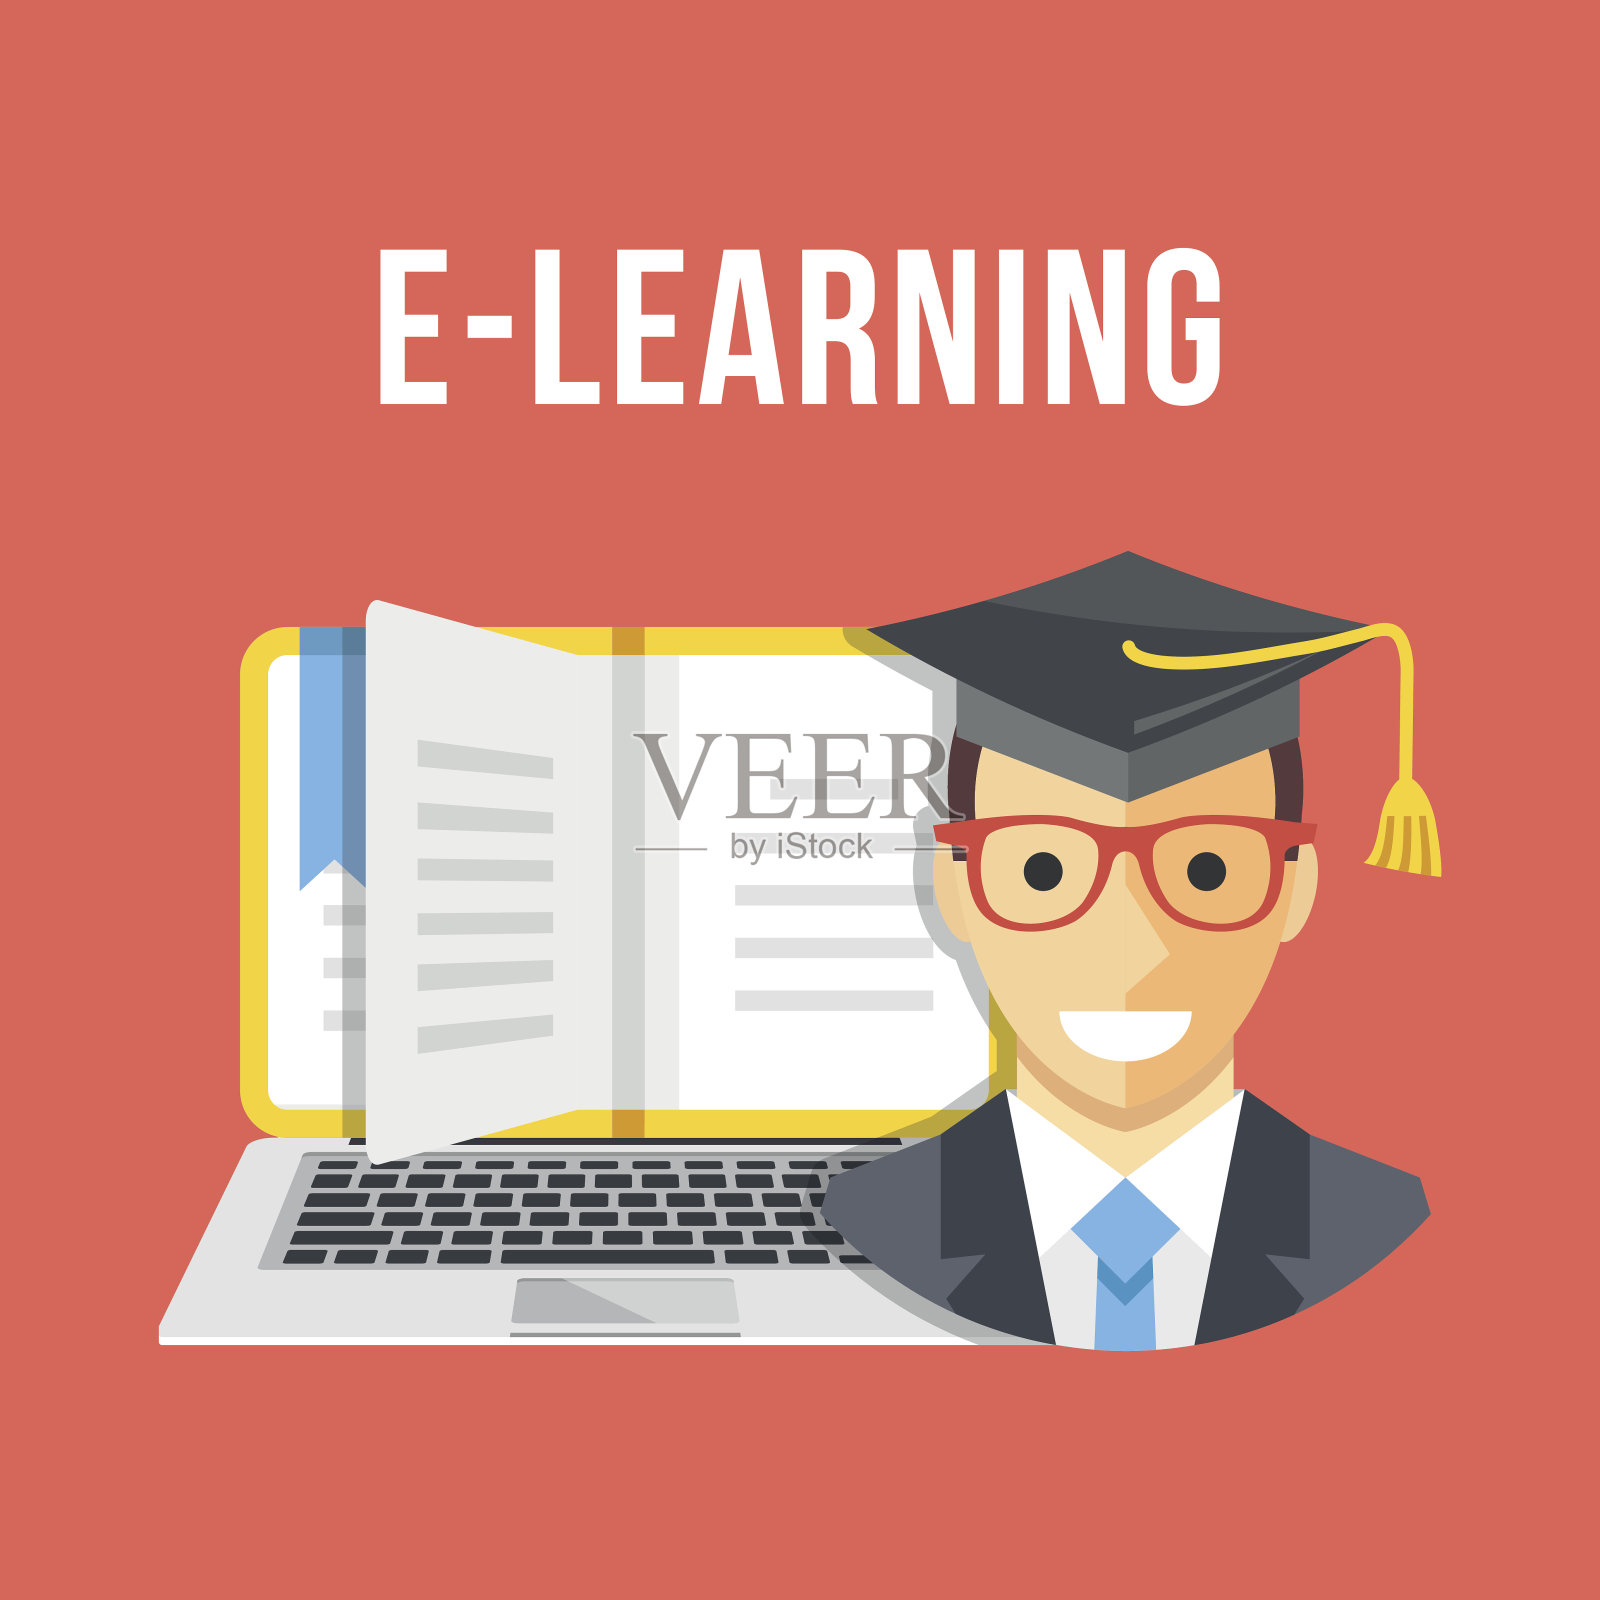 E-Learning，在线教育理念。平面设计矢量图插画图片素材